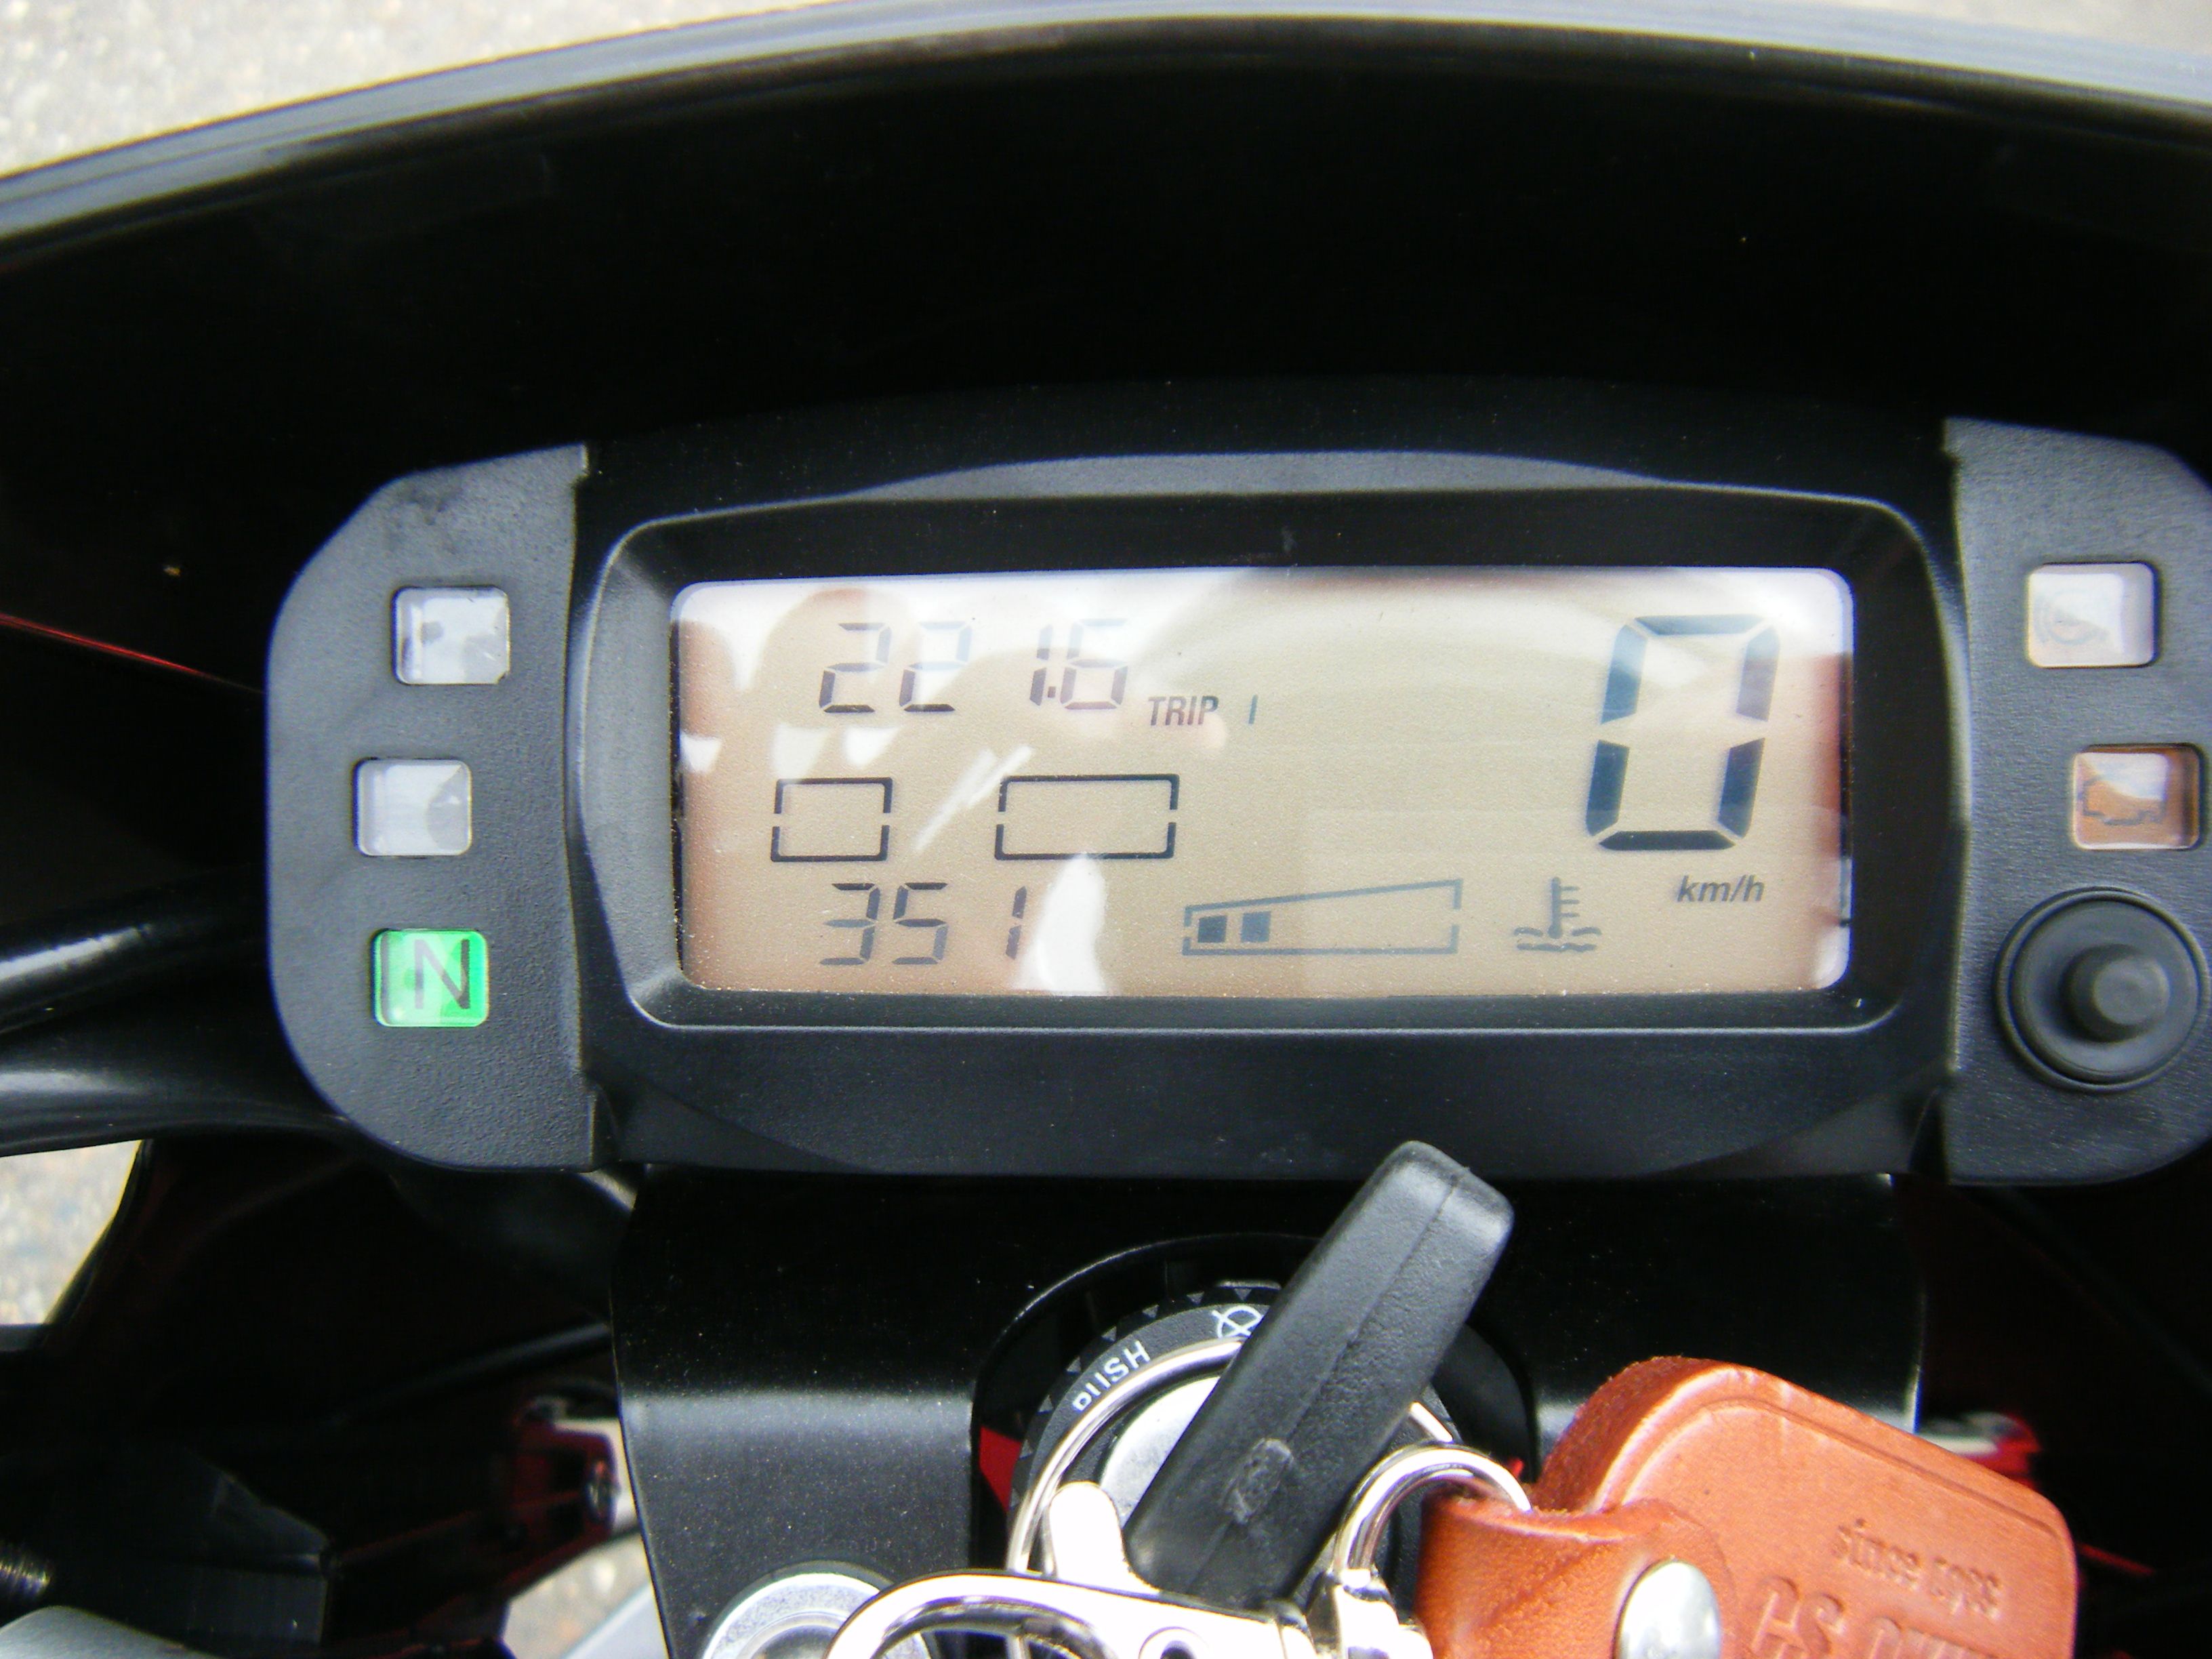 RX125 走行可能距離考察 | おっさんライダーのブログ - 楽天ブログ